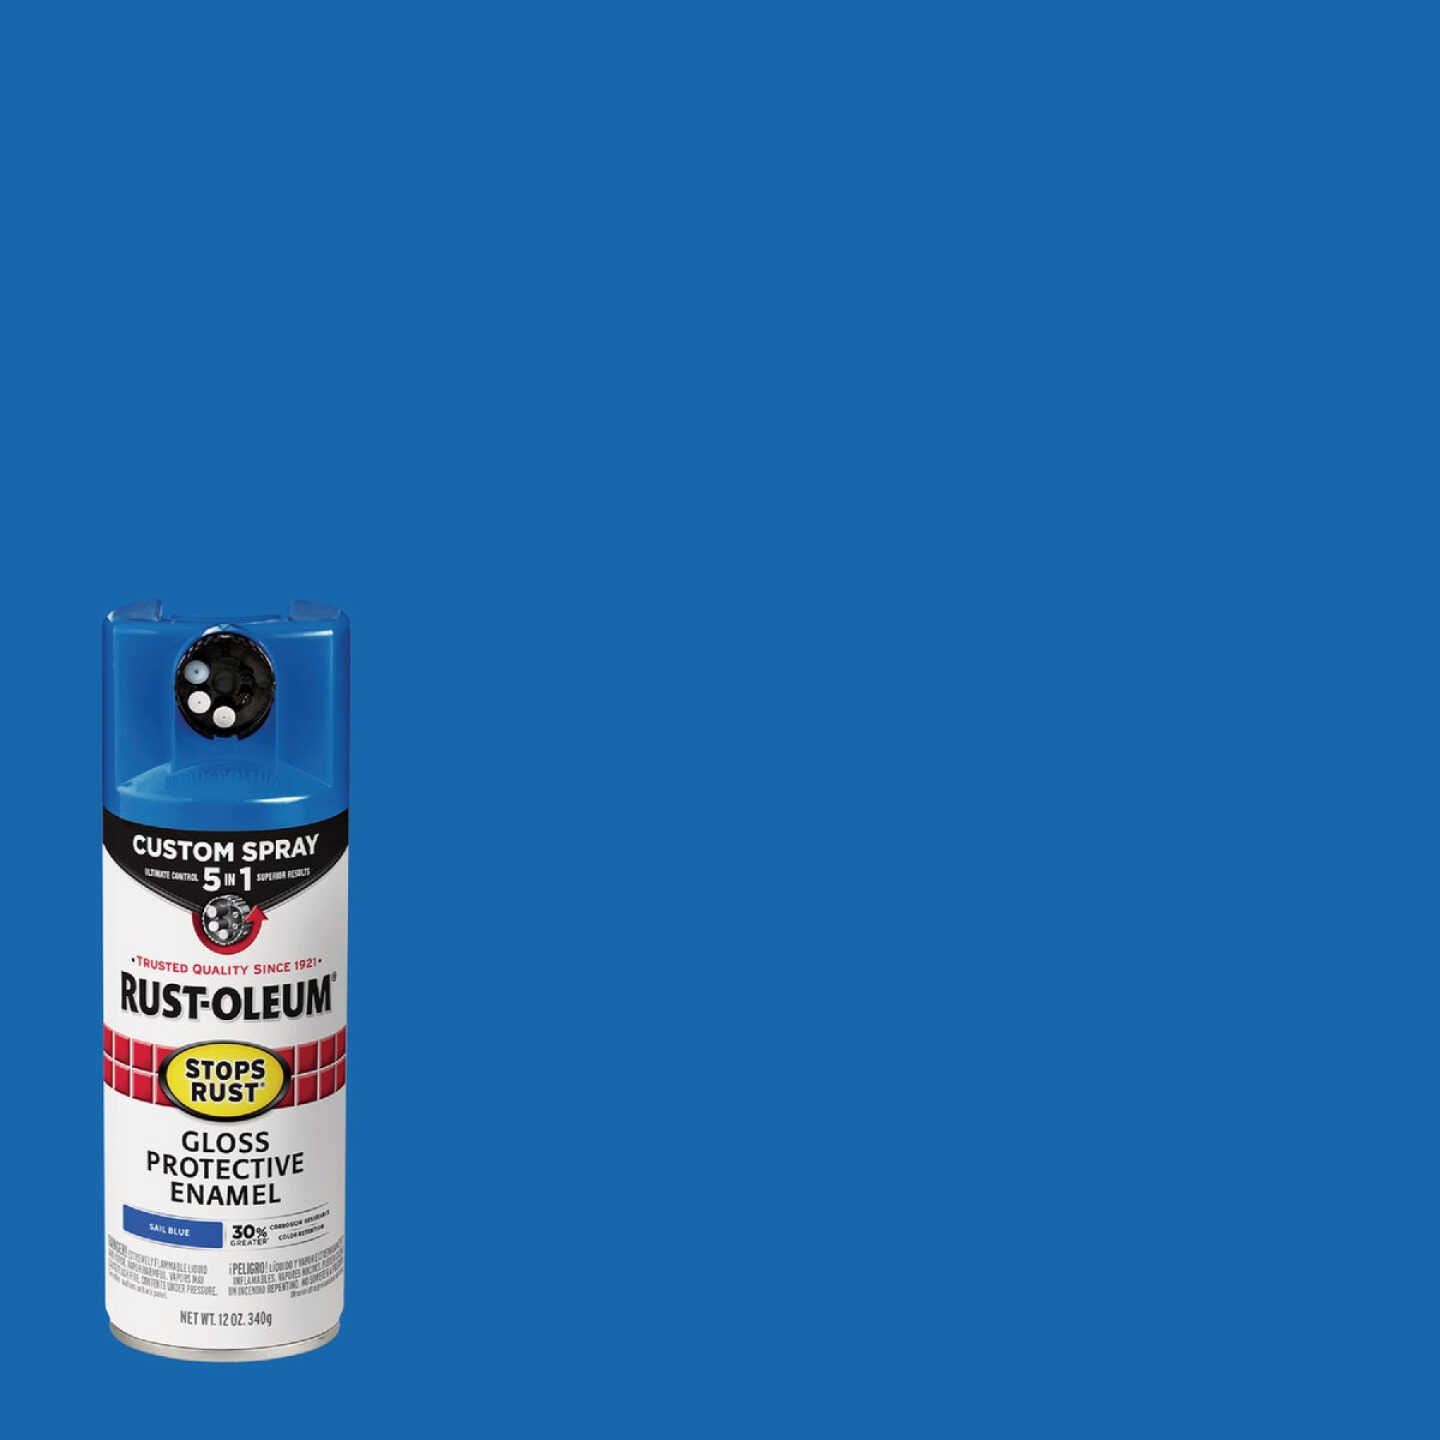 Rust-Oleum Stops Rust 12 Oz. Custom Spray 5 in 1 Gloss Spray Paint, Sail  Blue - Hemly Hardware